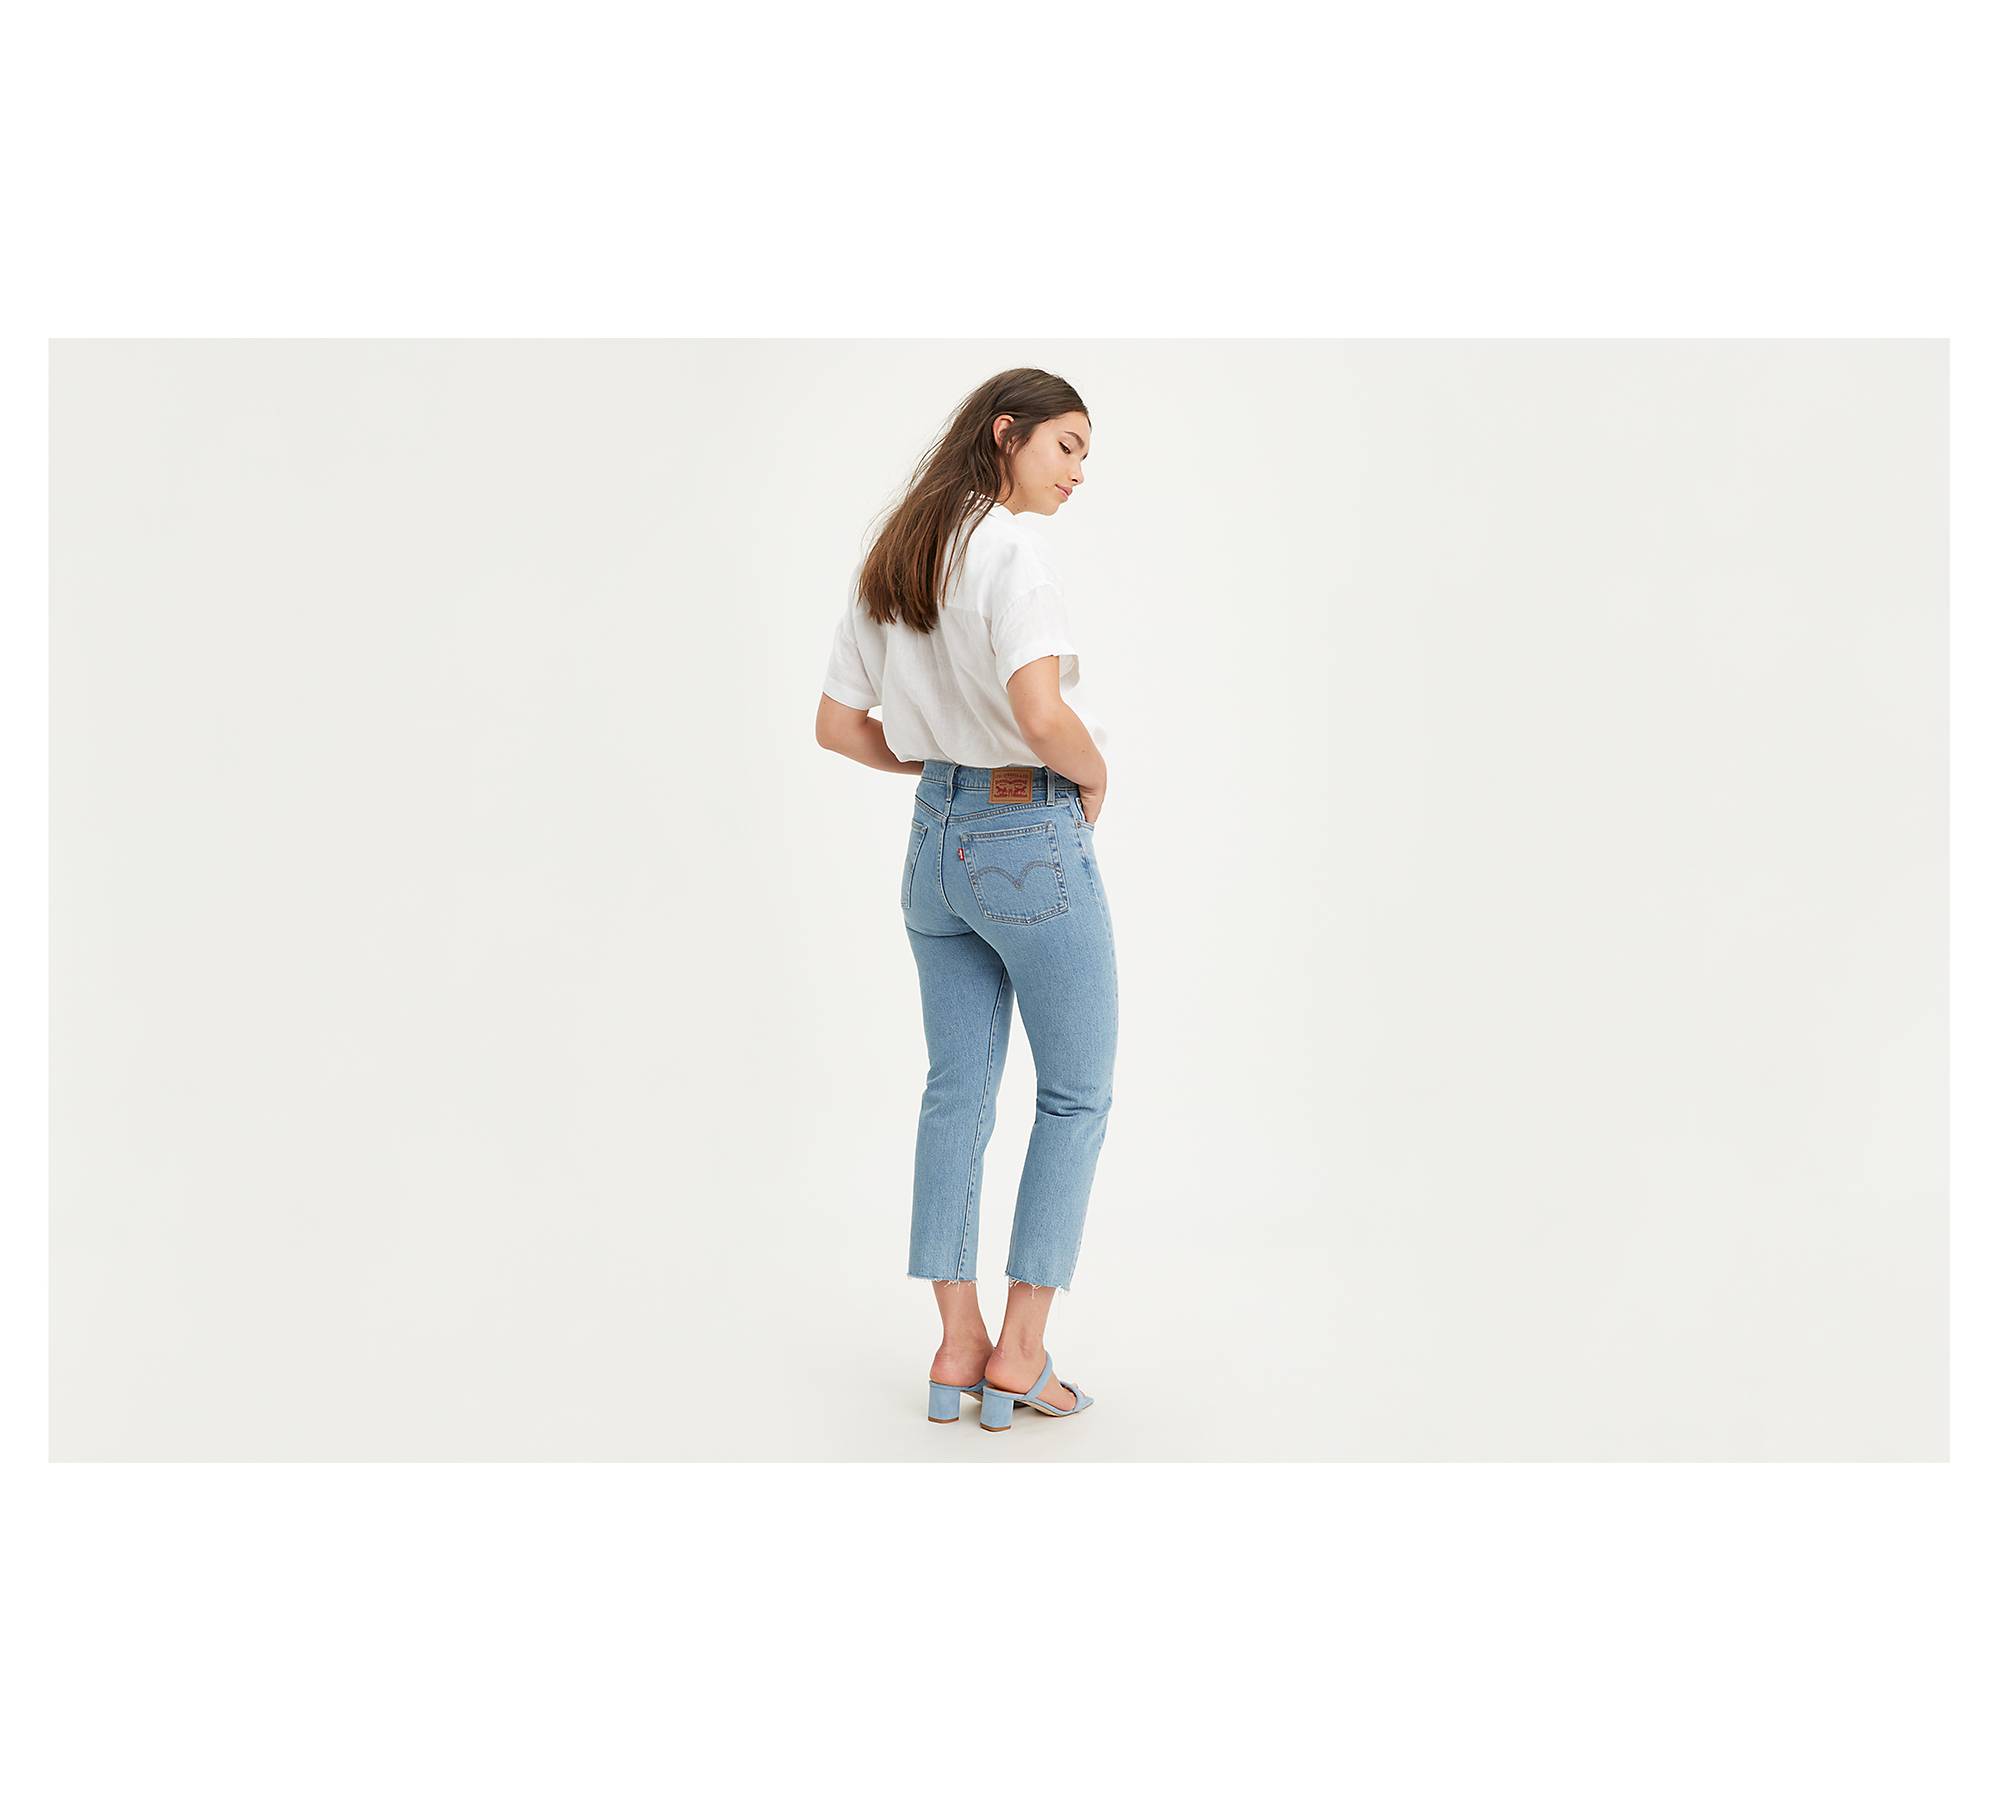 Wedgie Straight Fit Women's Jeans - Medium Wash